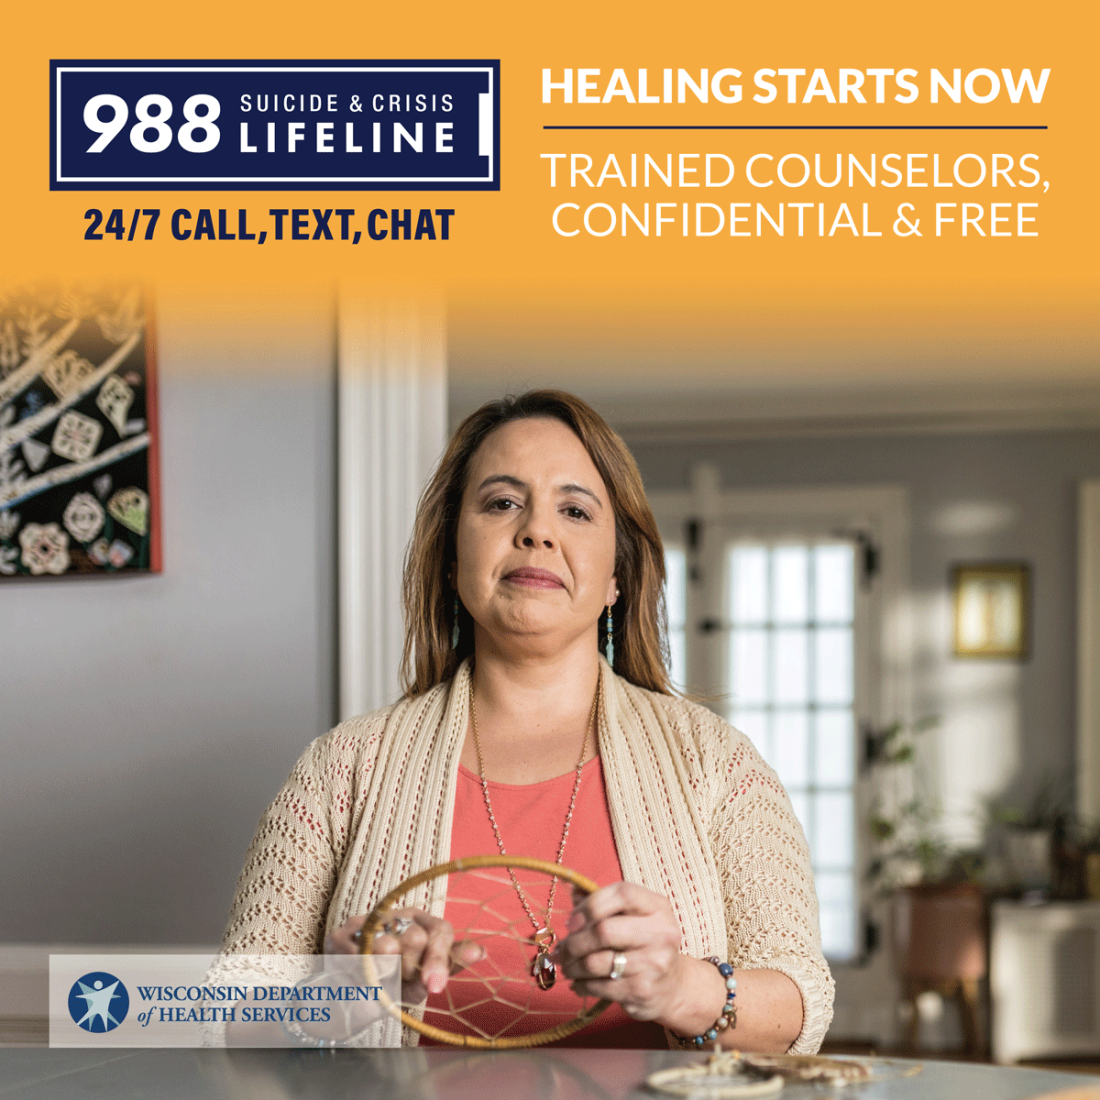 Adult - Healing starts now - 988 Suicide & Crisis Lifeline